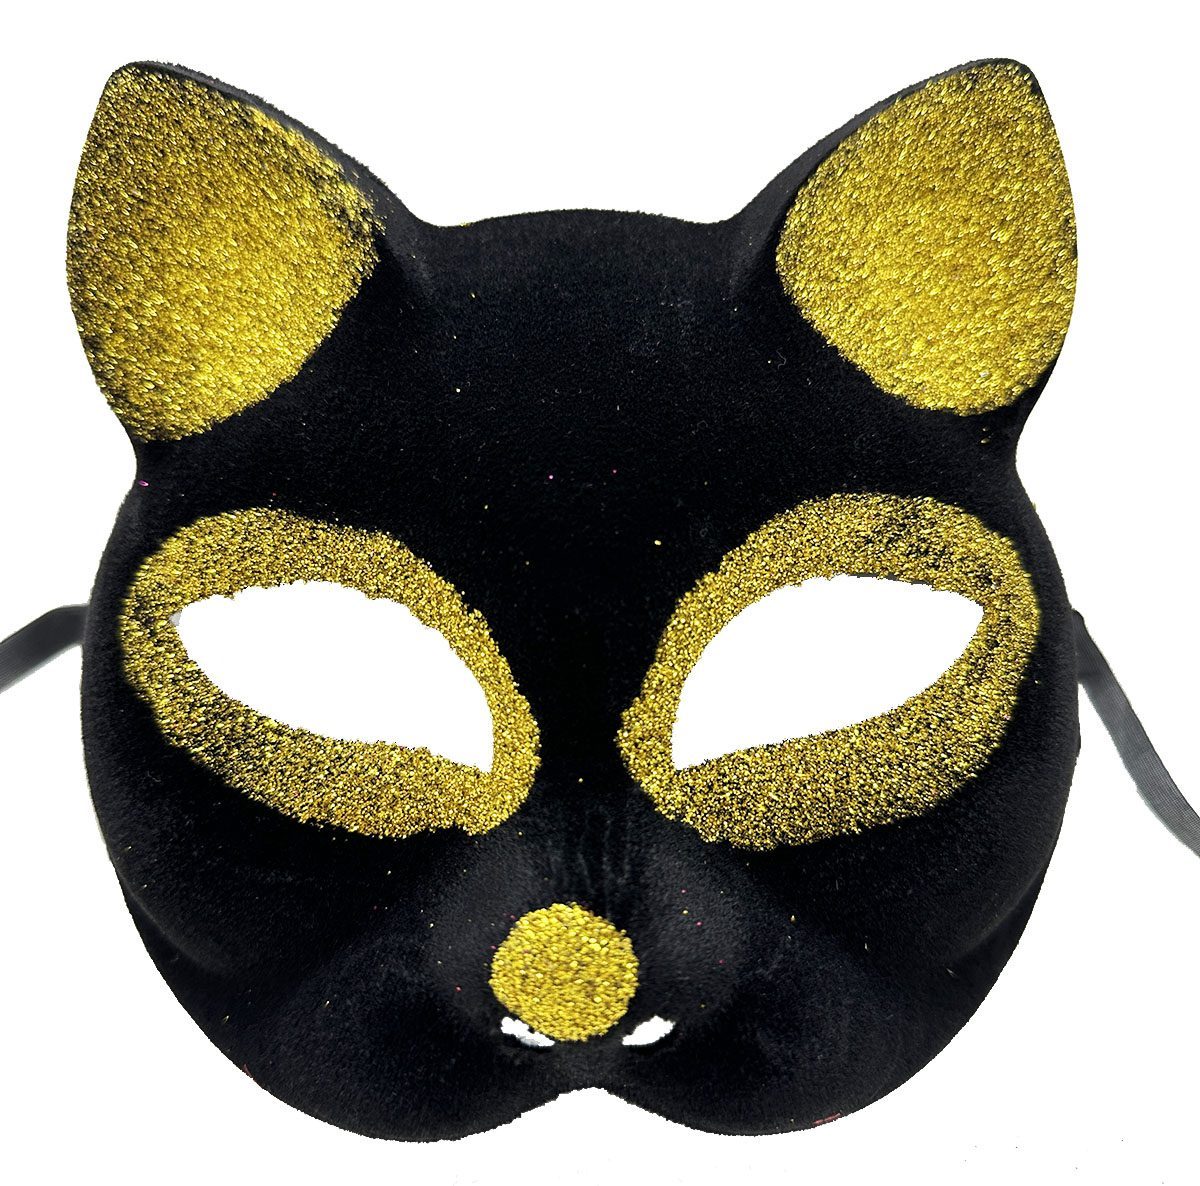 Siyah Renk Gold Simli Süet Kaplama Kedi Maskesi 18x14 cm (Lisinya)